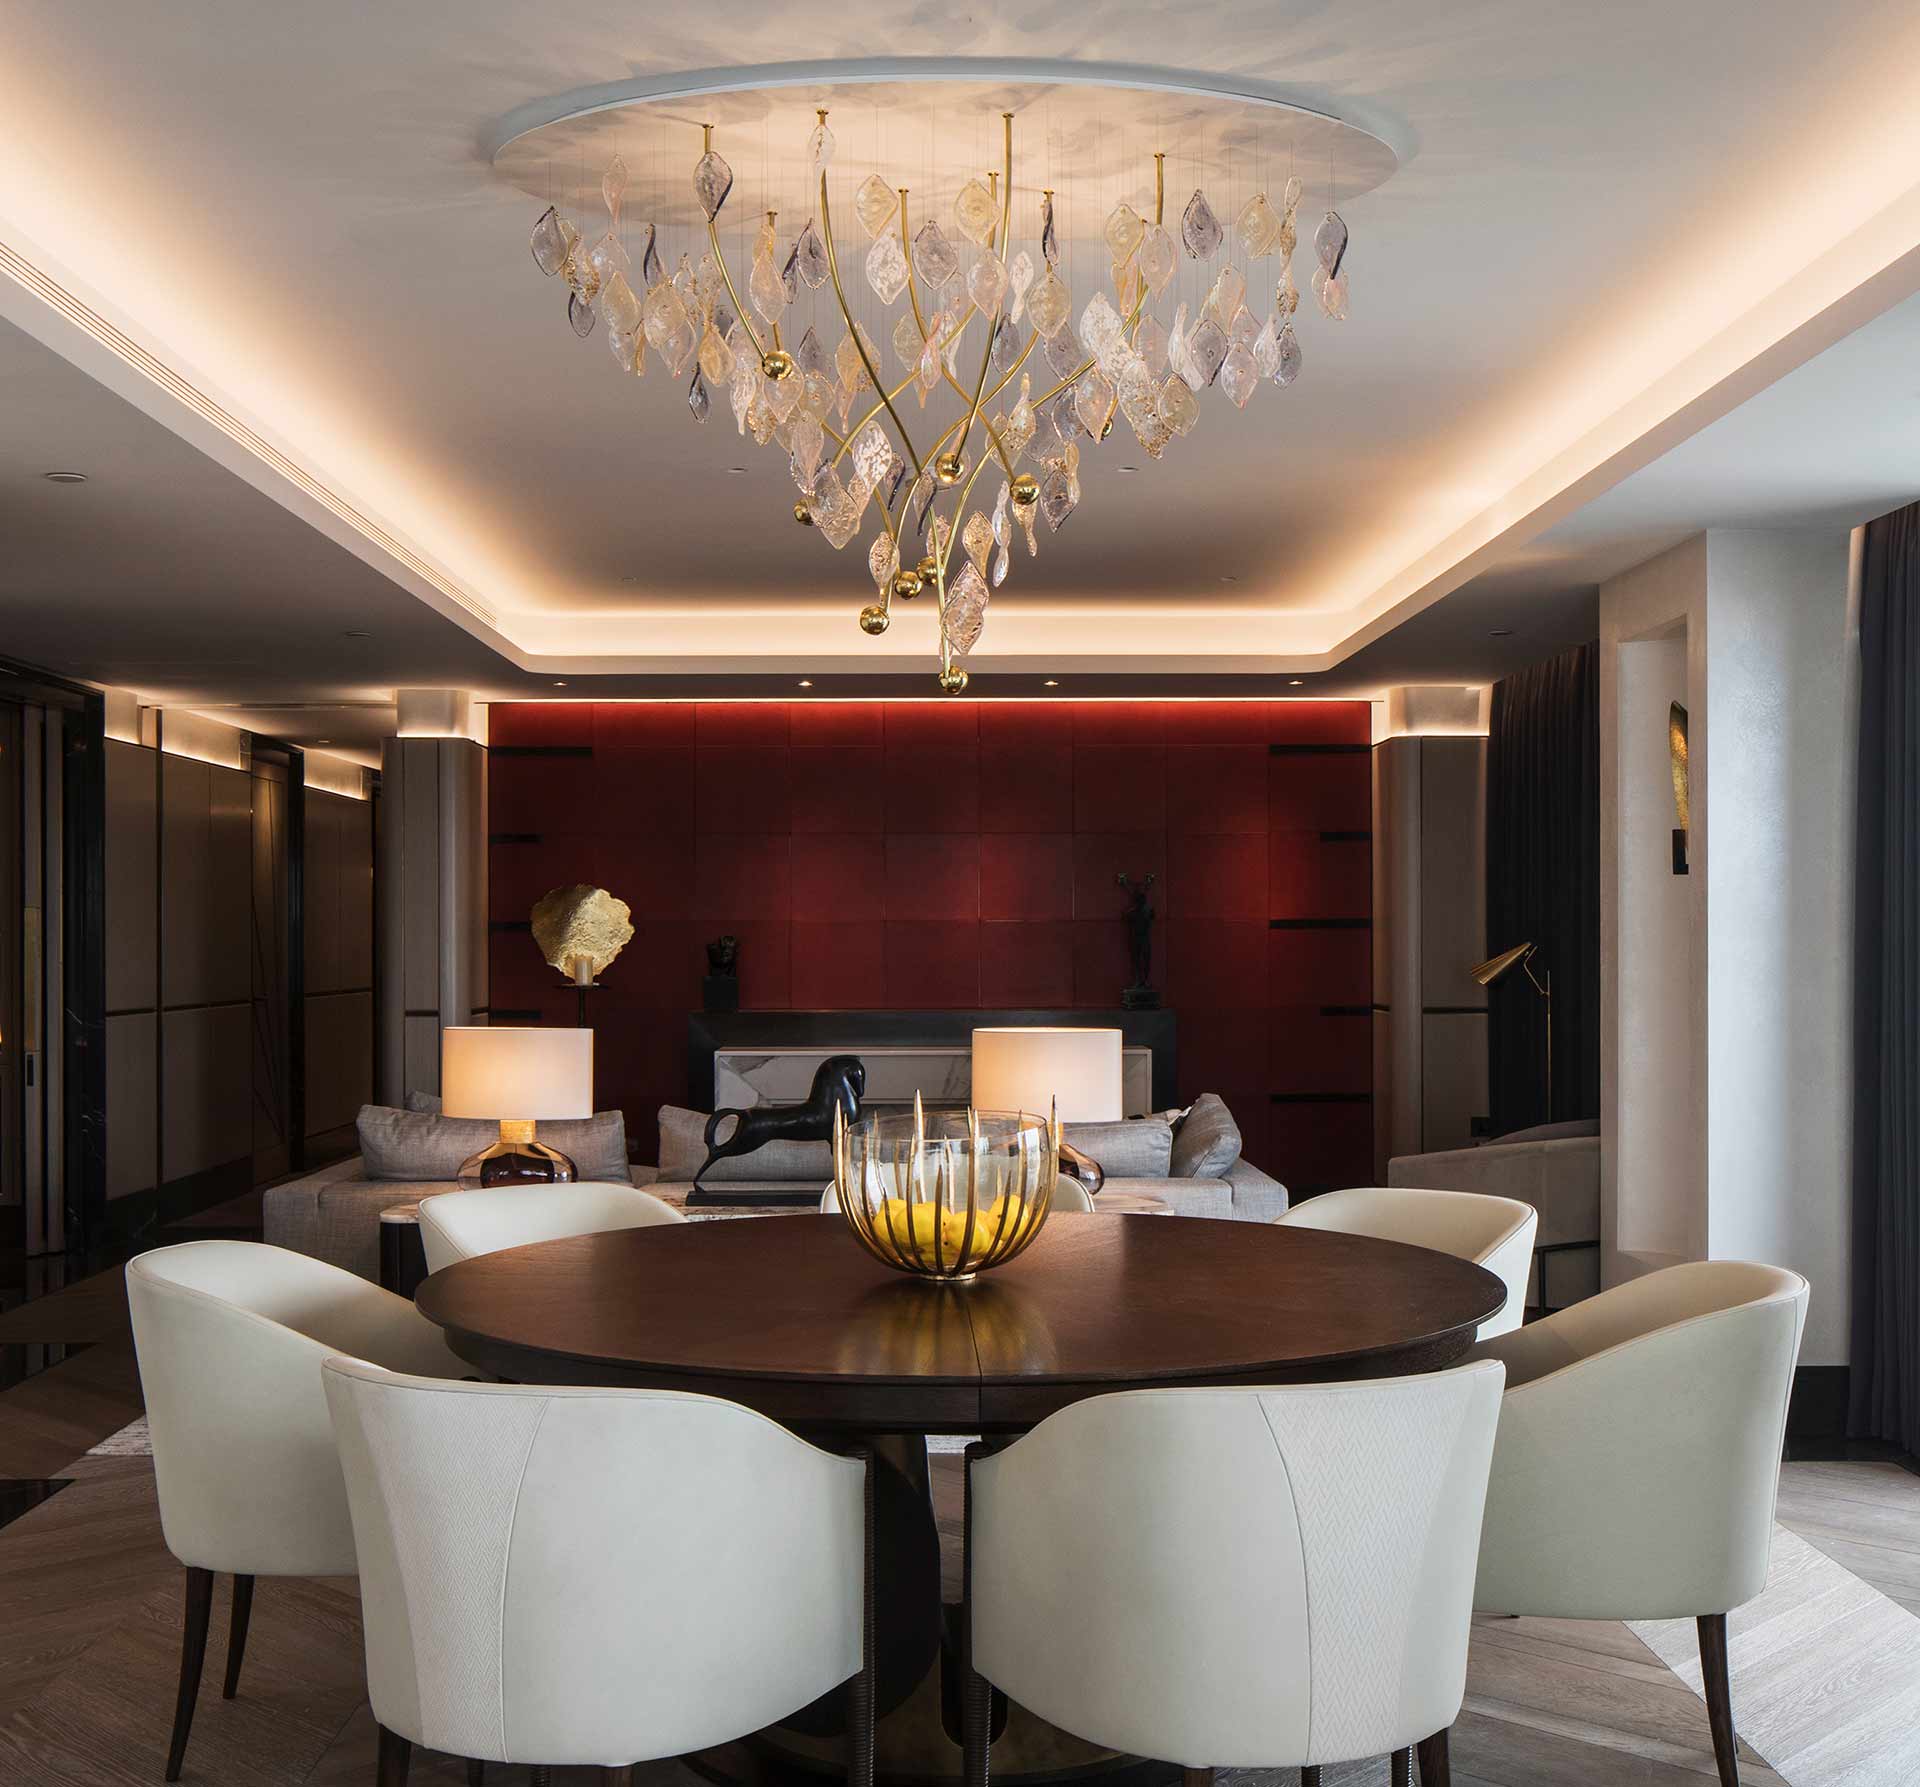 Custom London Plane Tree Chandelier Luxury Lighting Installation Penthouse Dining Room Makers Nulty Bespoke